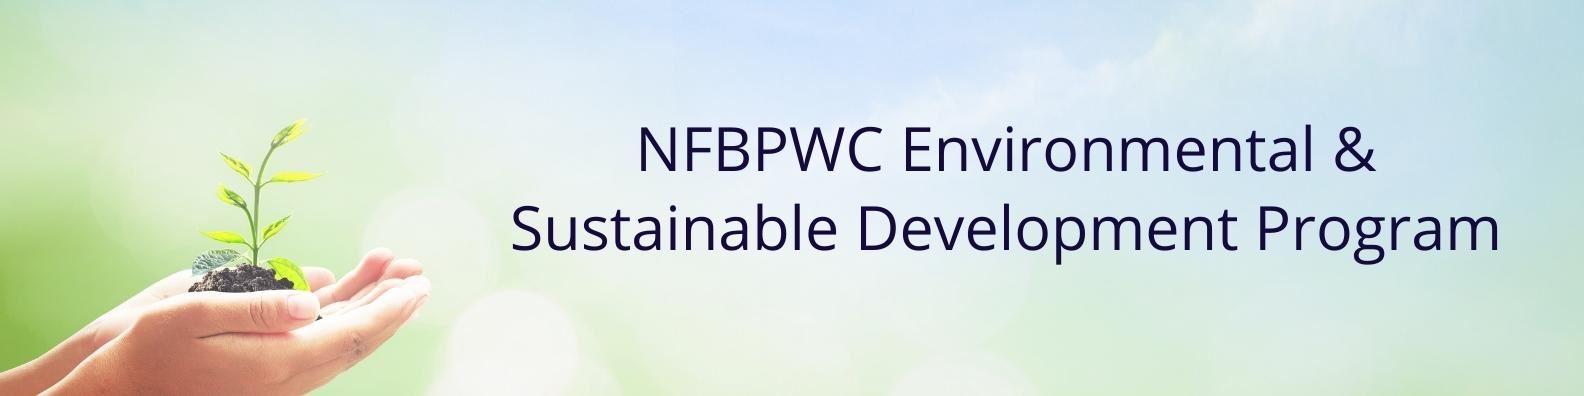 Environmental & Sustainable Development Program